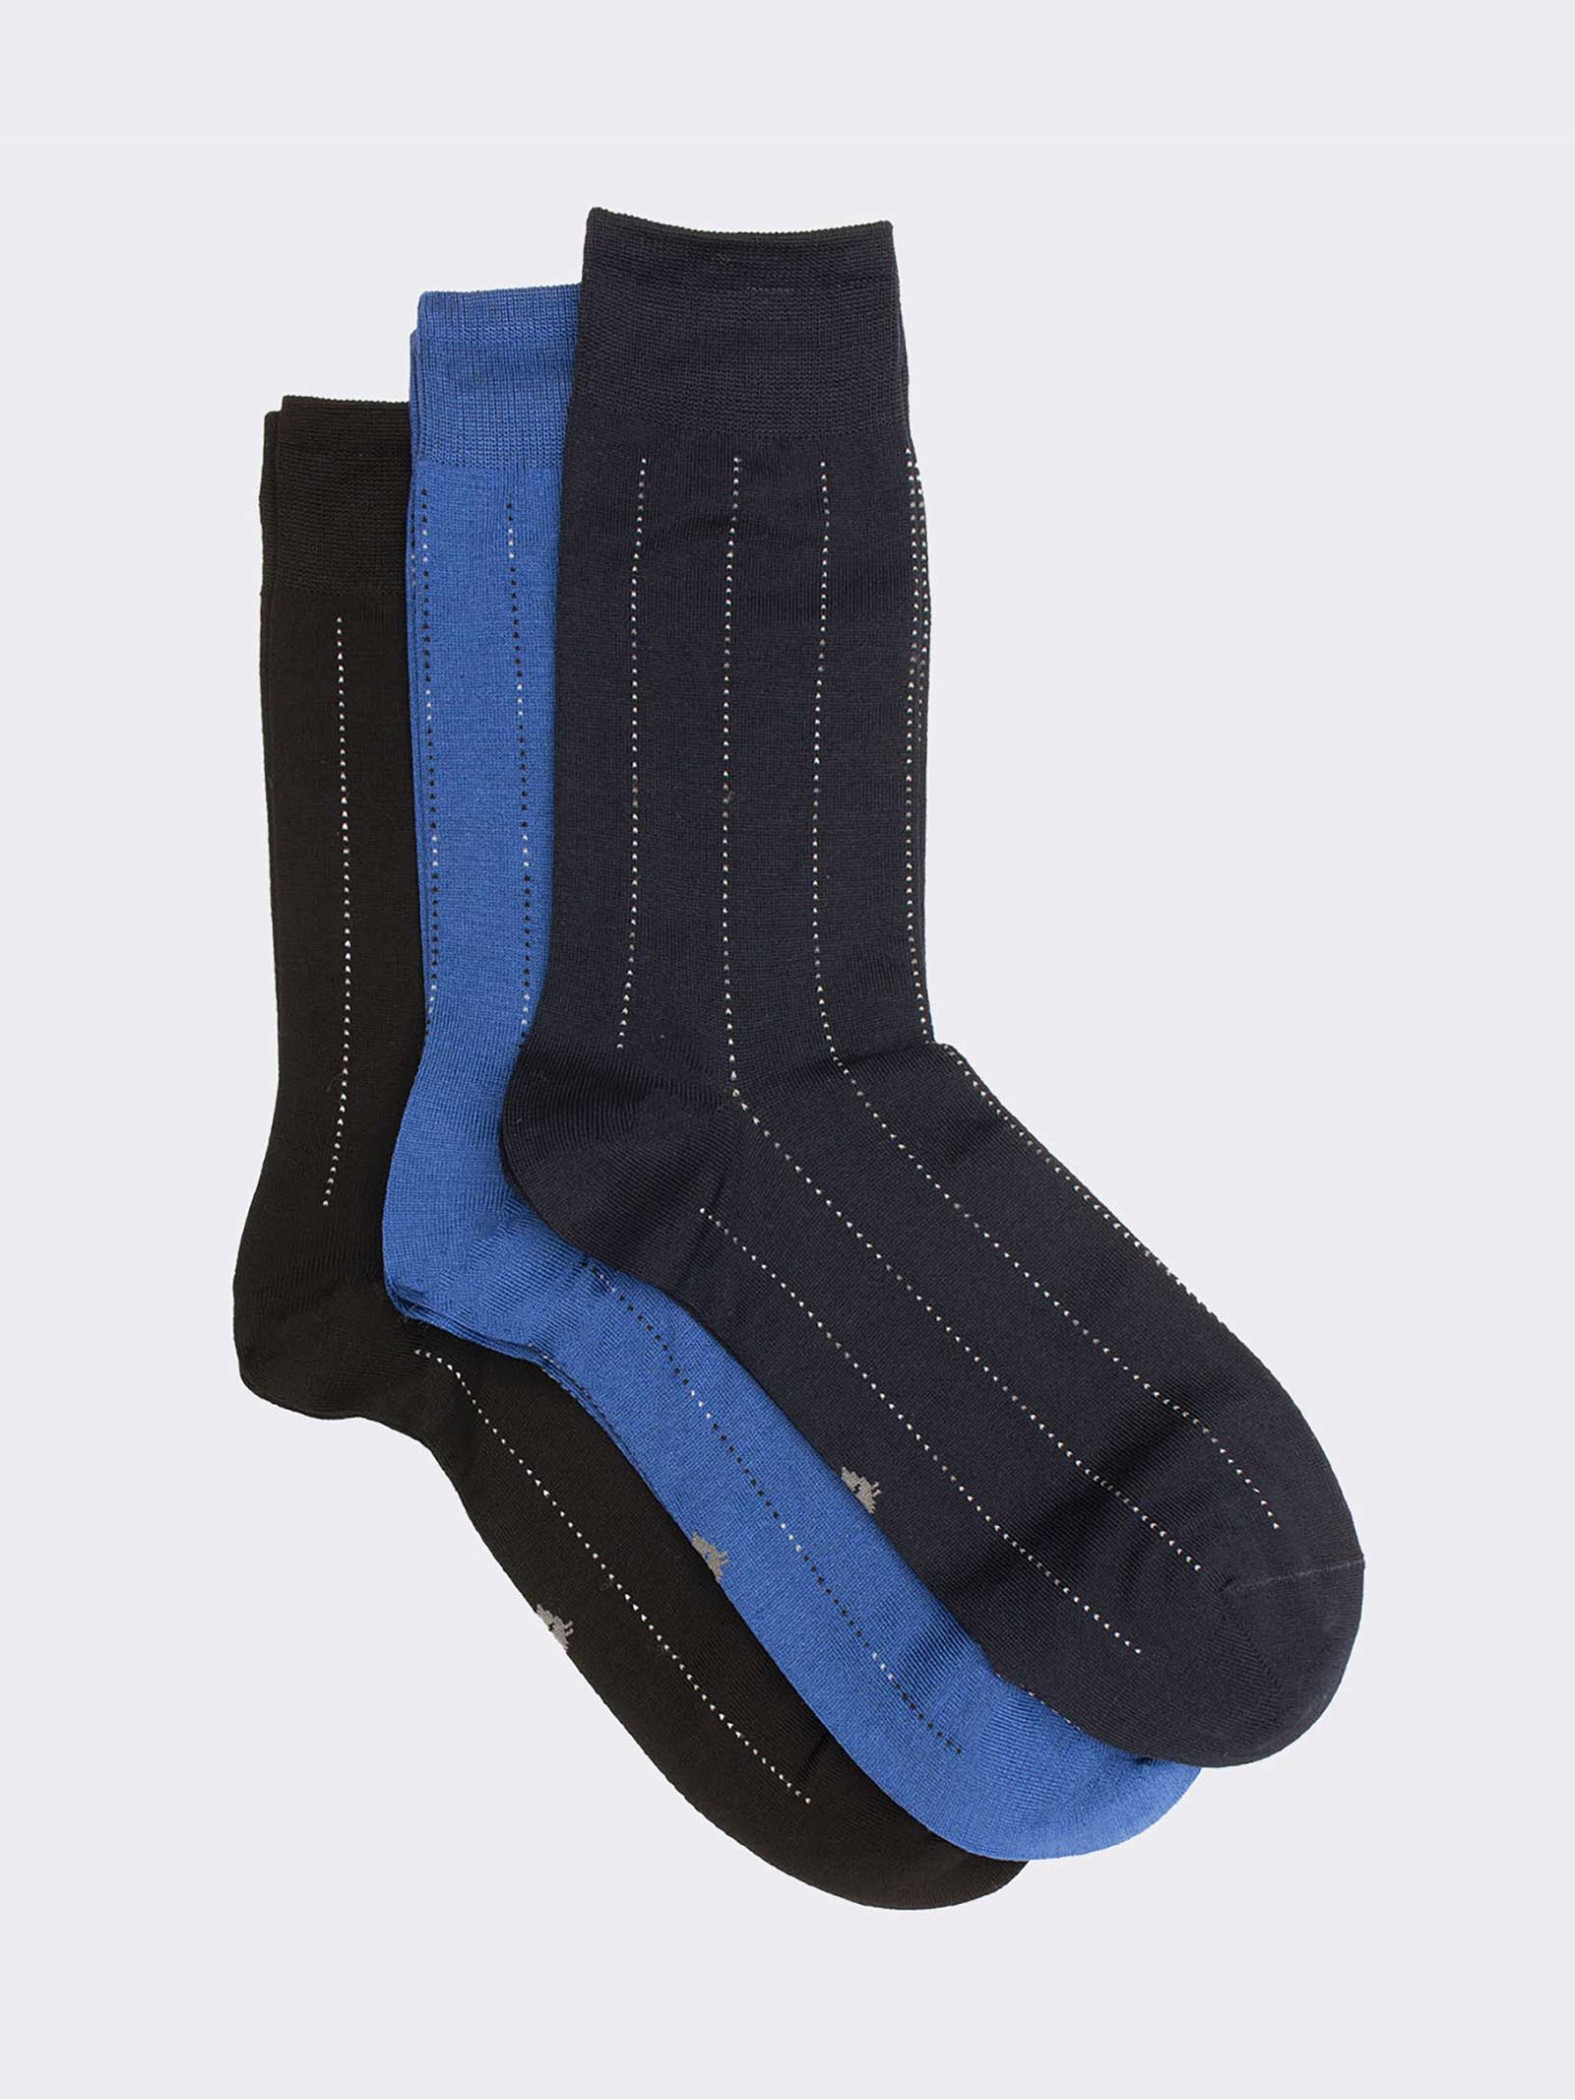 Crew tris socks micro pattern 